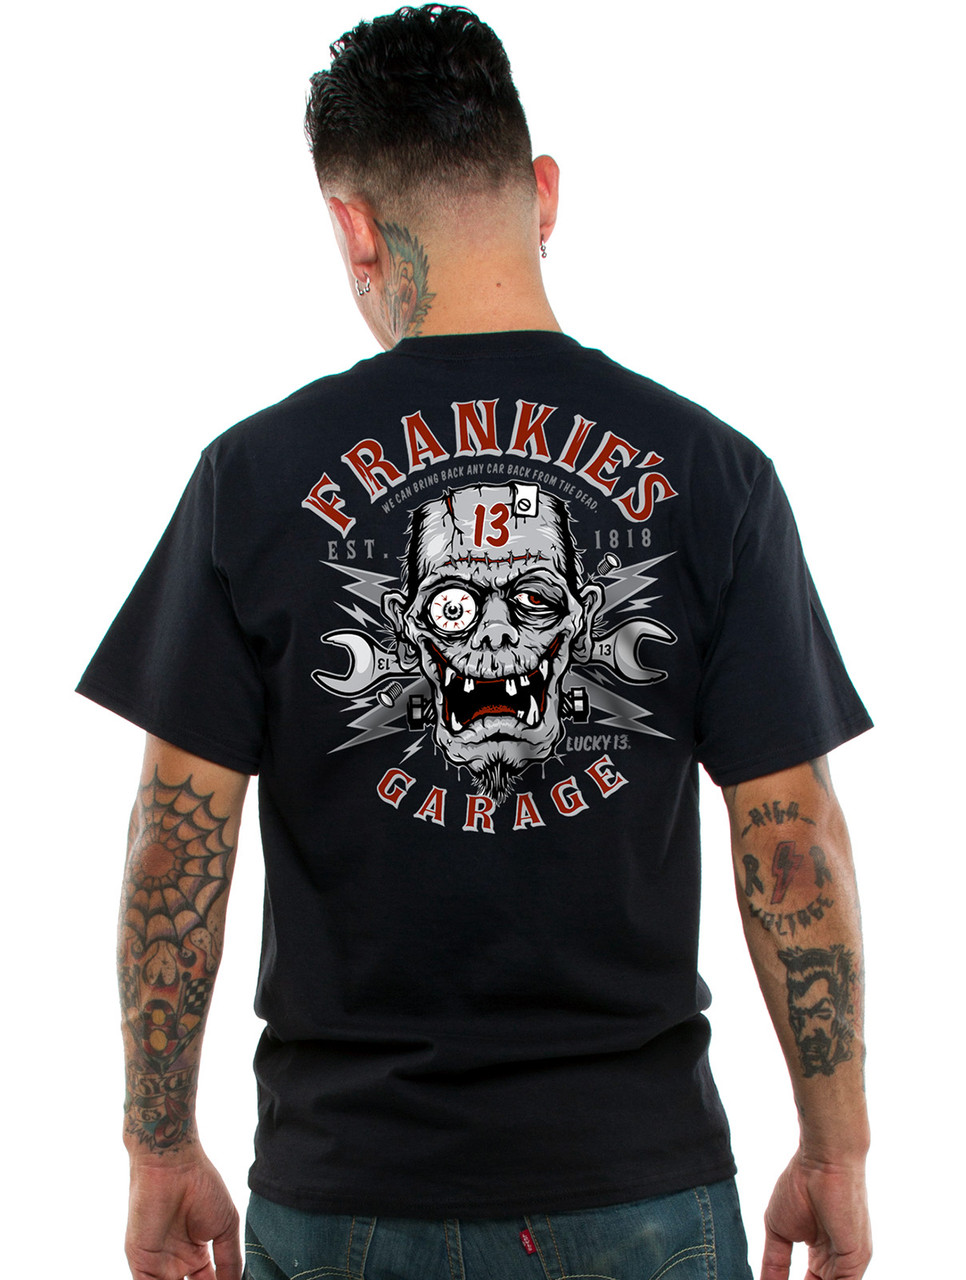 Lucky 13 Men's Frankie's Garage T-Shirt - Merch2rock Alternative Clothing